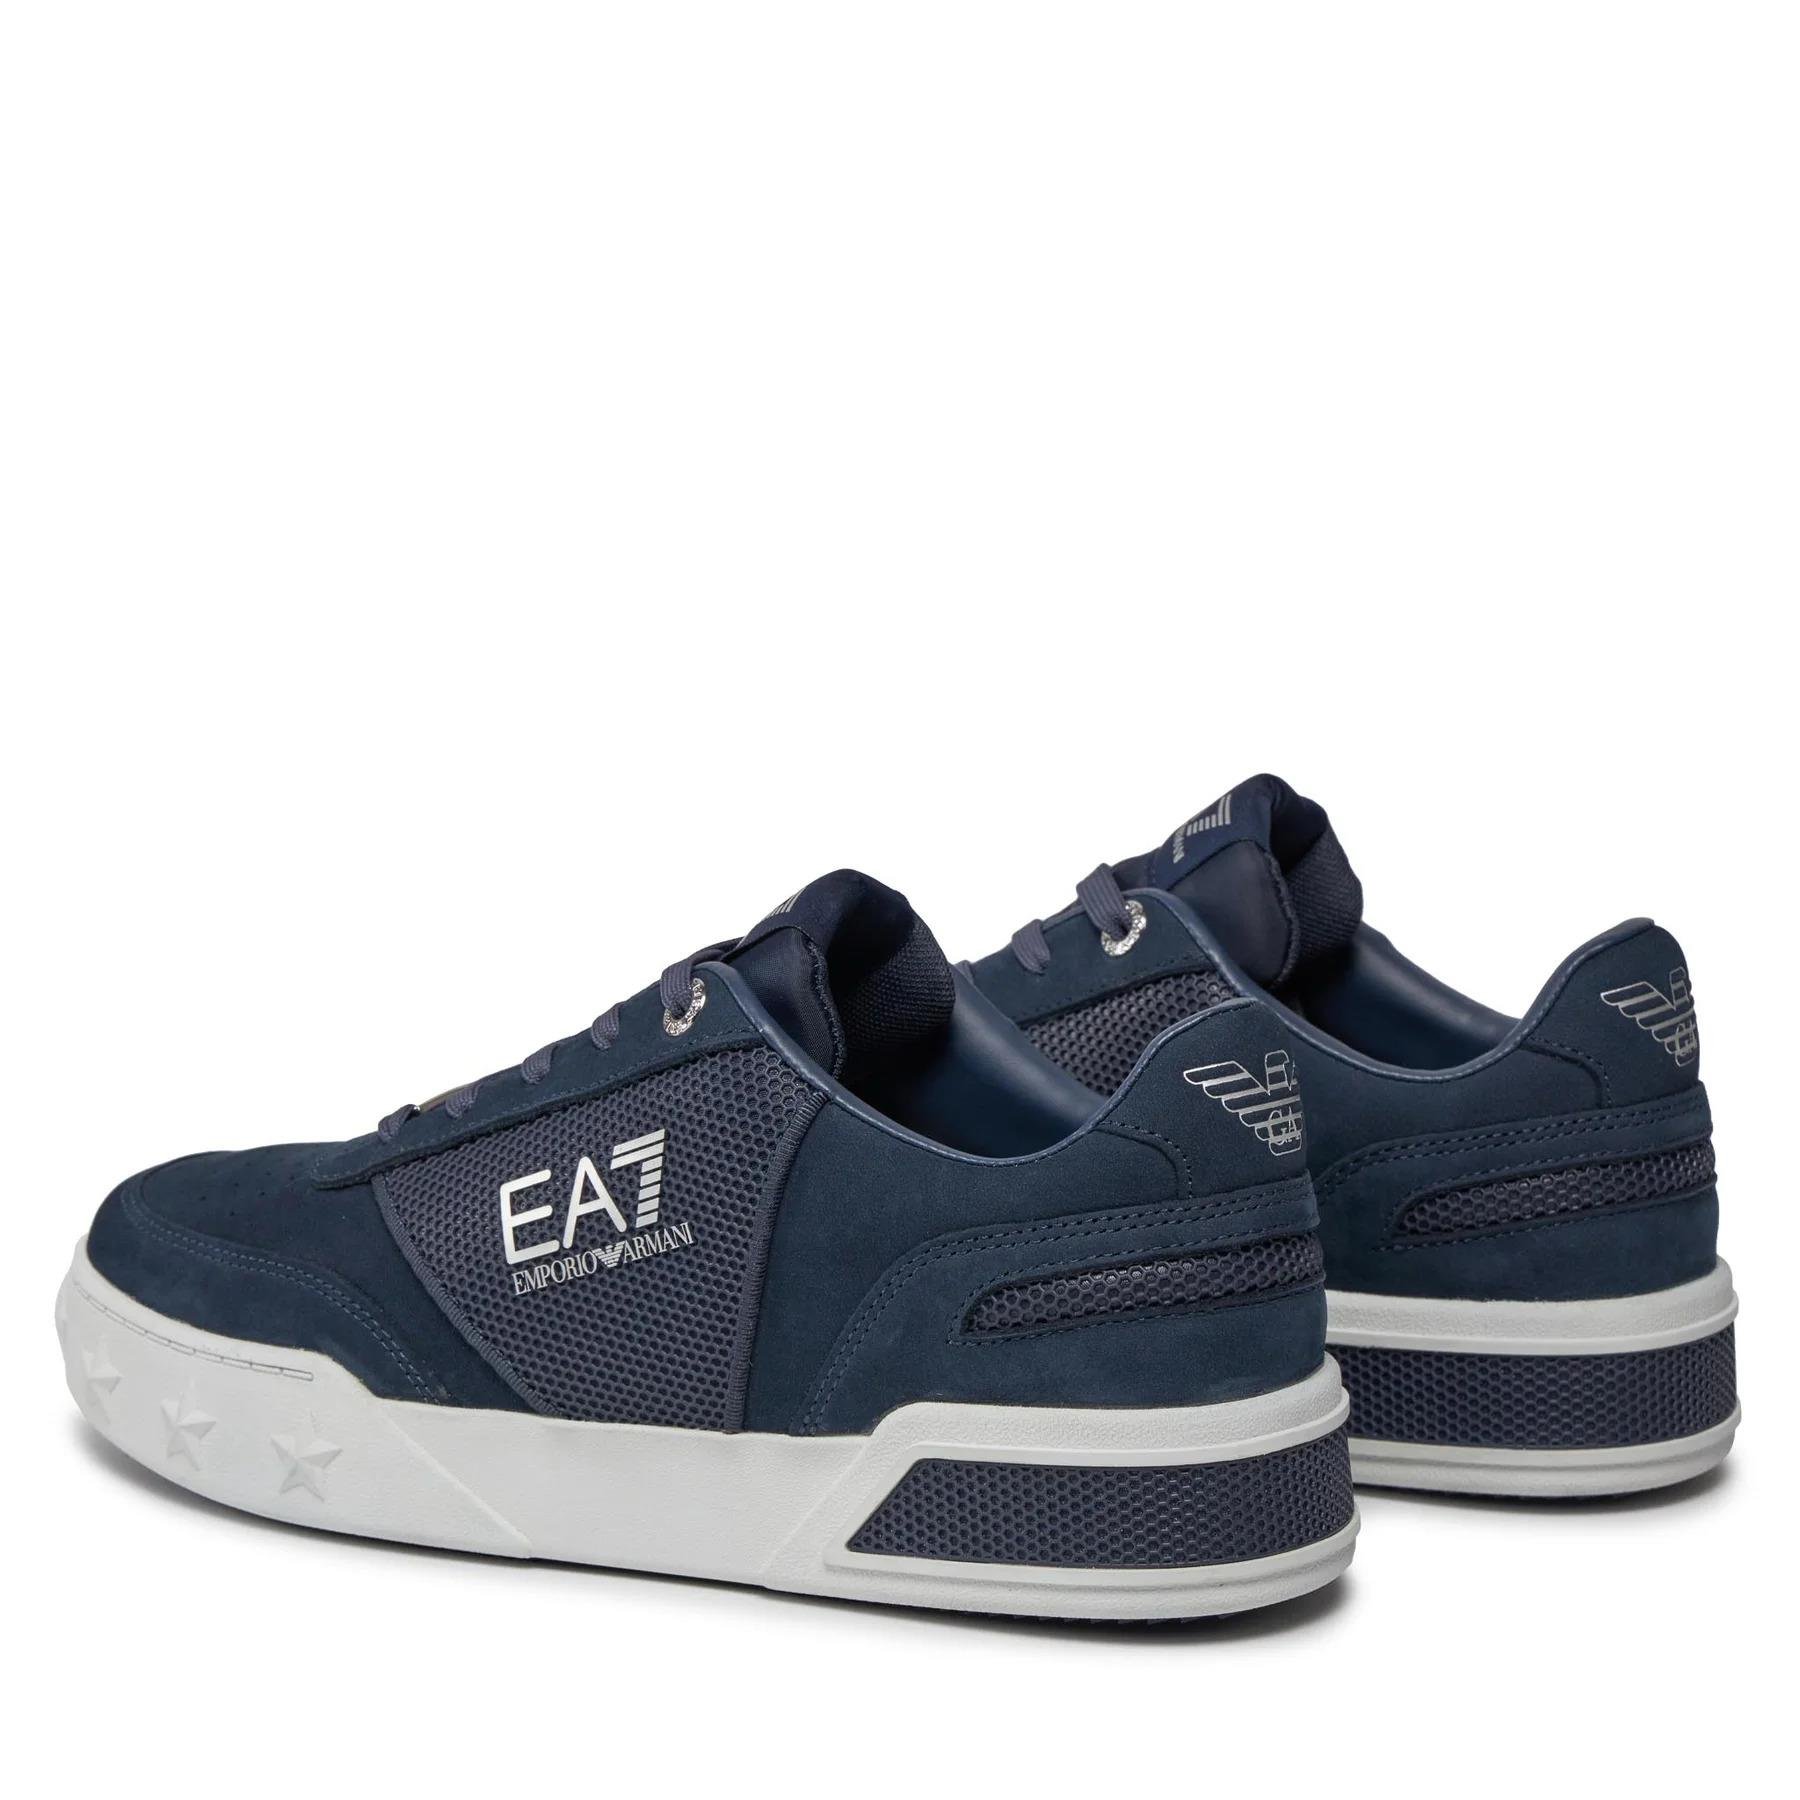 EA7 Emporio Armani Lacivert Sneakers | Flower Ayakkabı